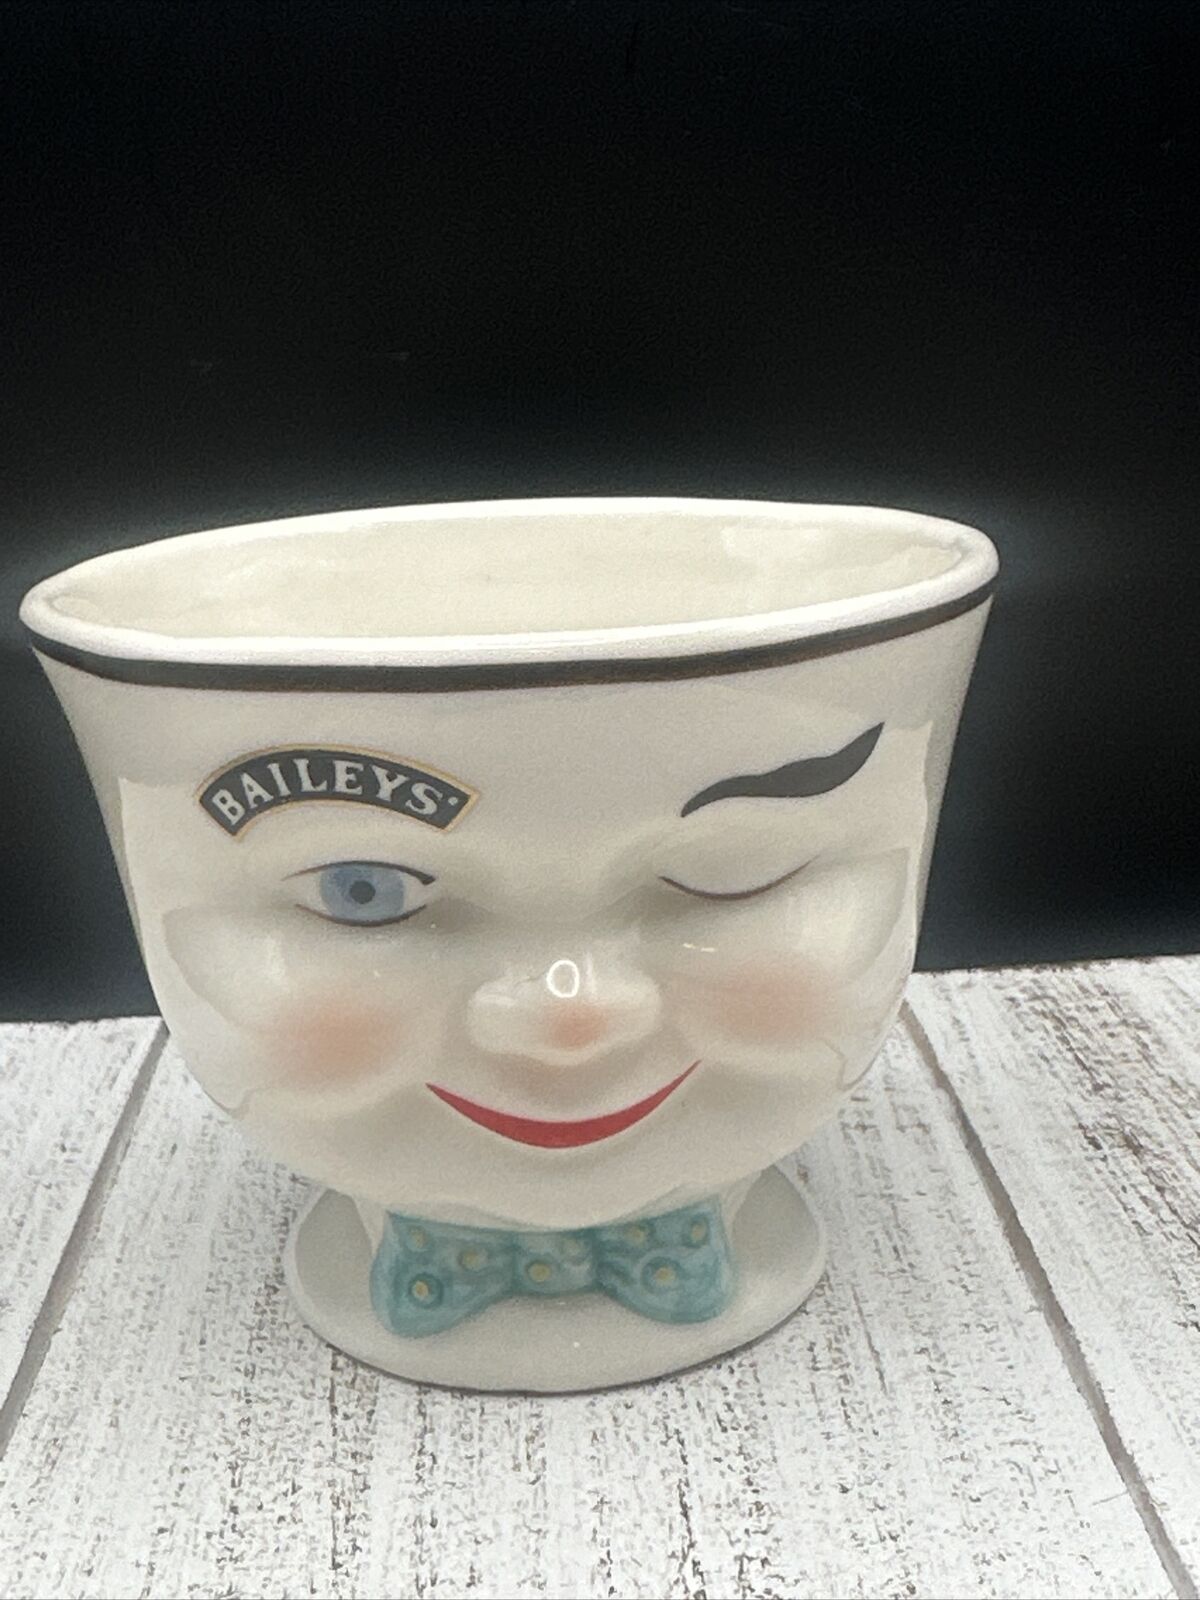 Vintage 1996 BAILEY’S Irish Cream Liquor Winking man Yum Sugar Bowl Cup Mug